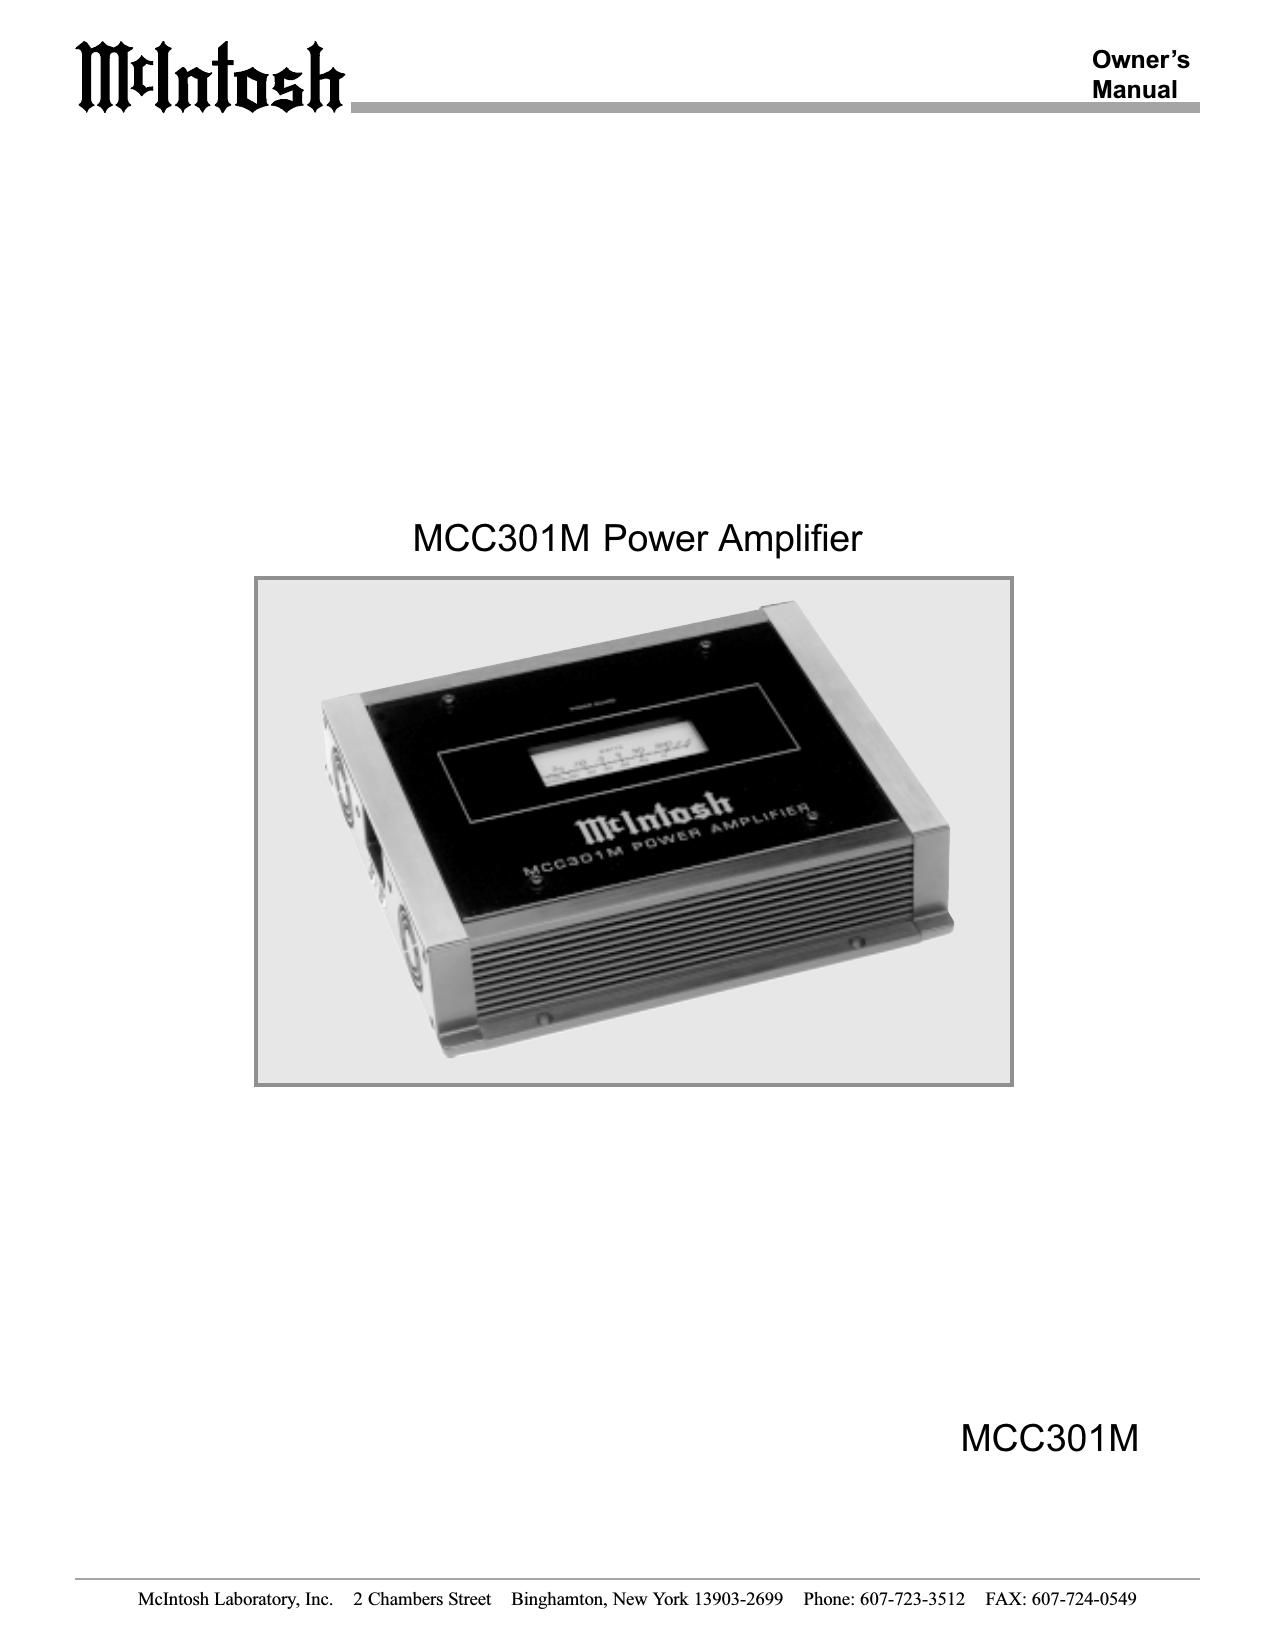 McIntosh MCC301M Owners Manual